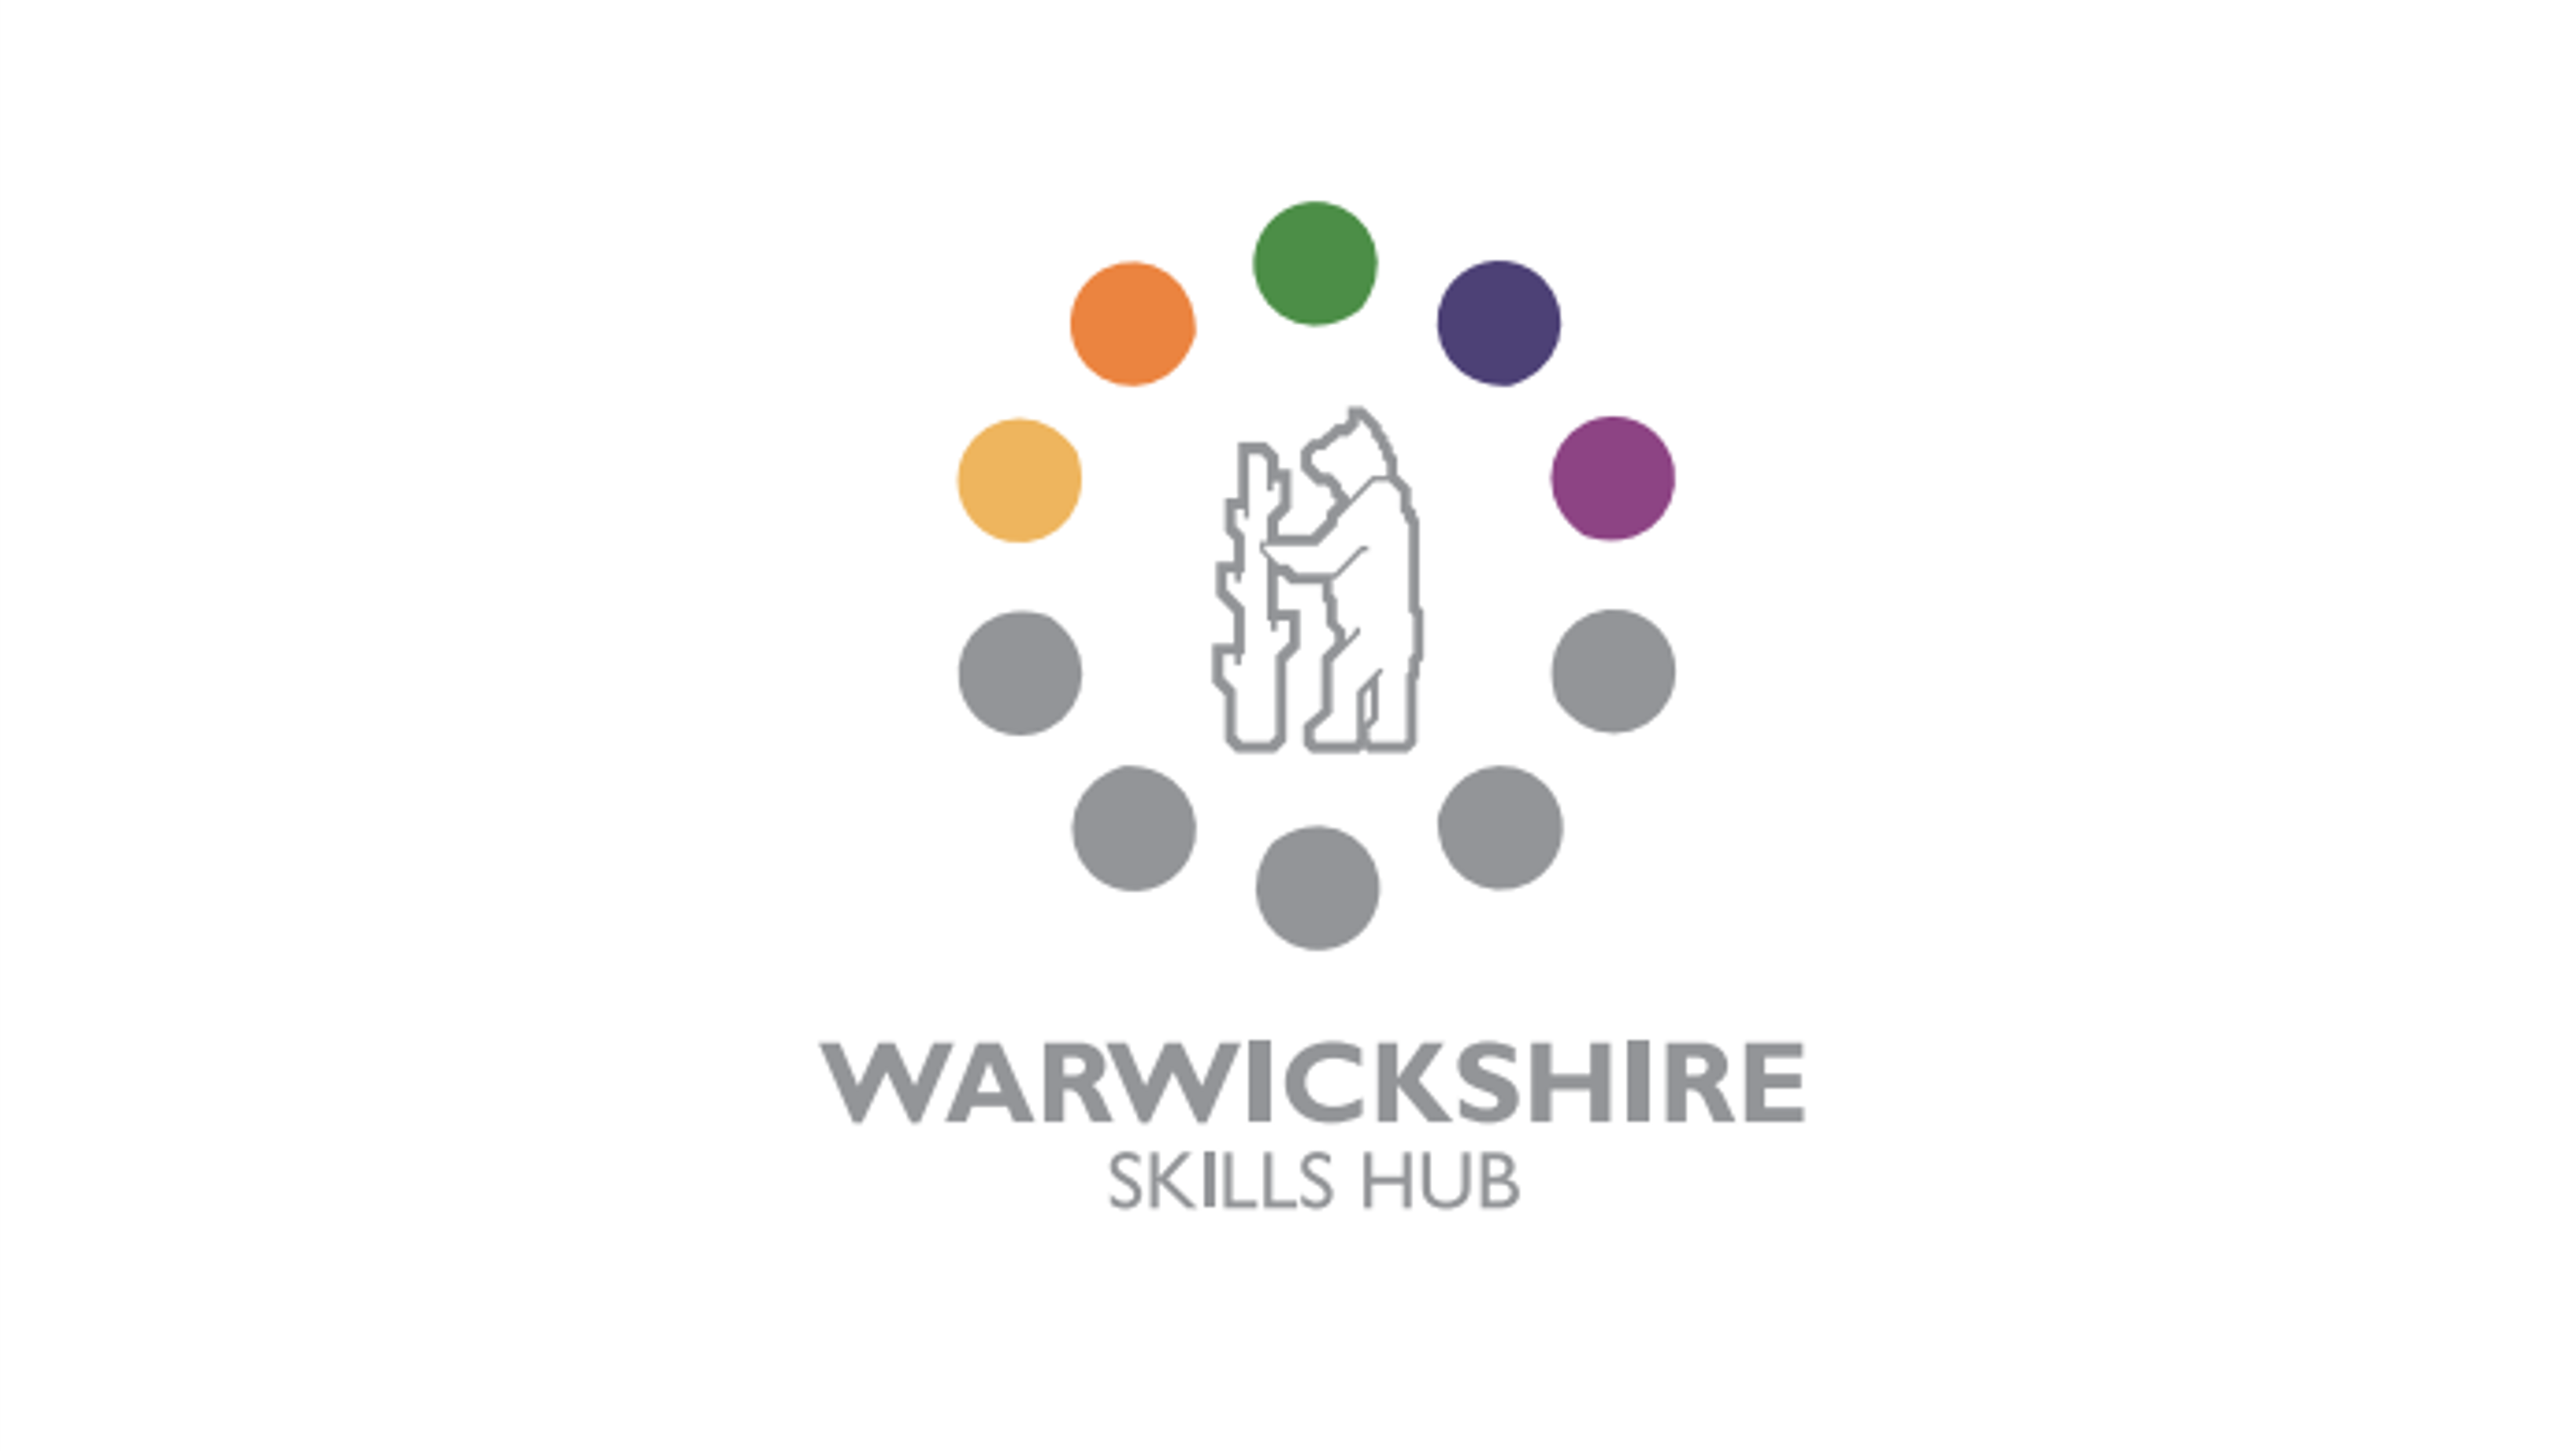 Funding opportunities through Warwickshire Skills Hub